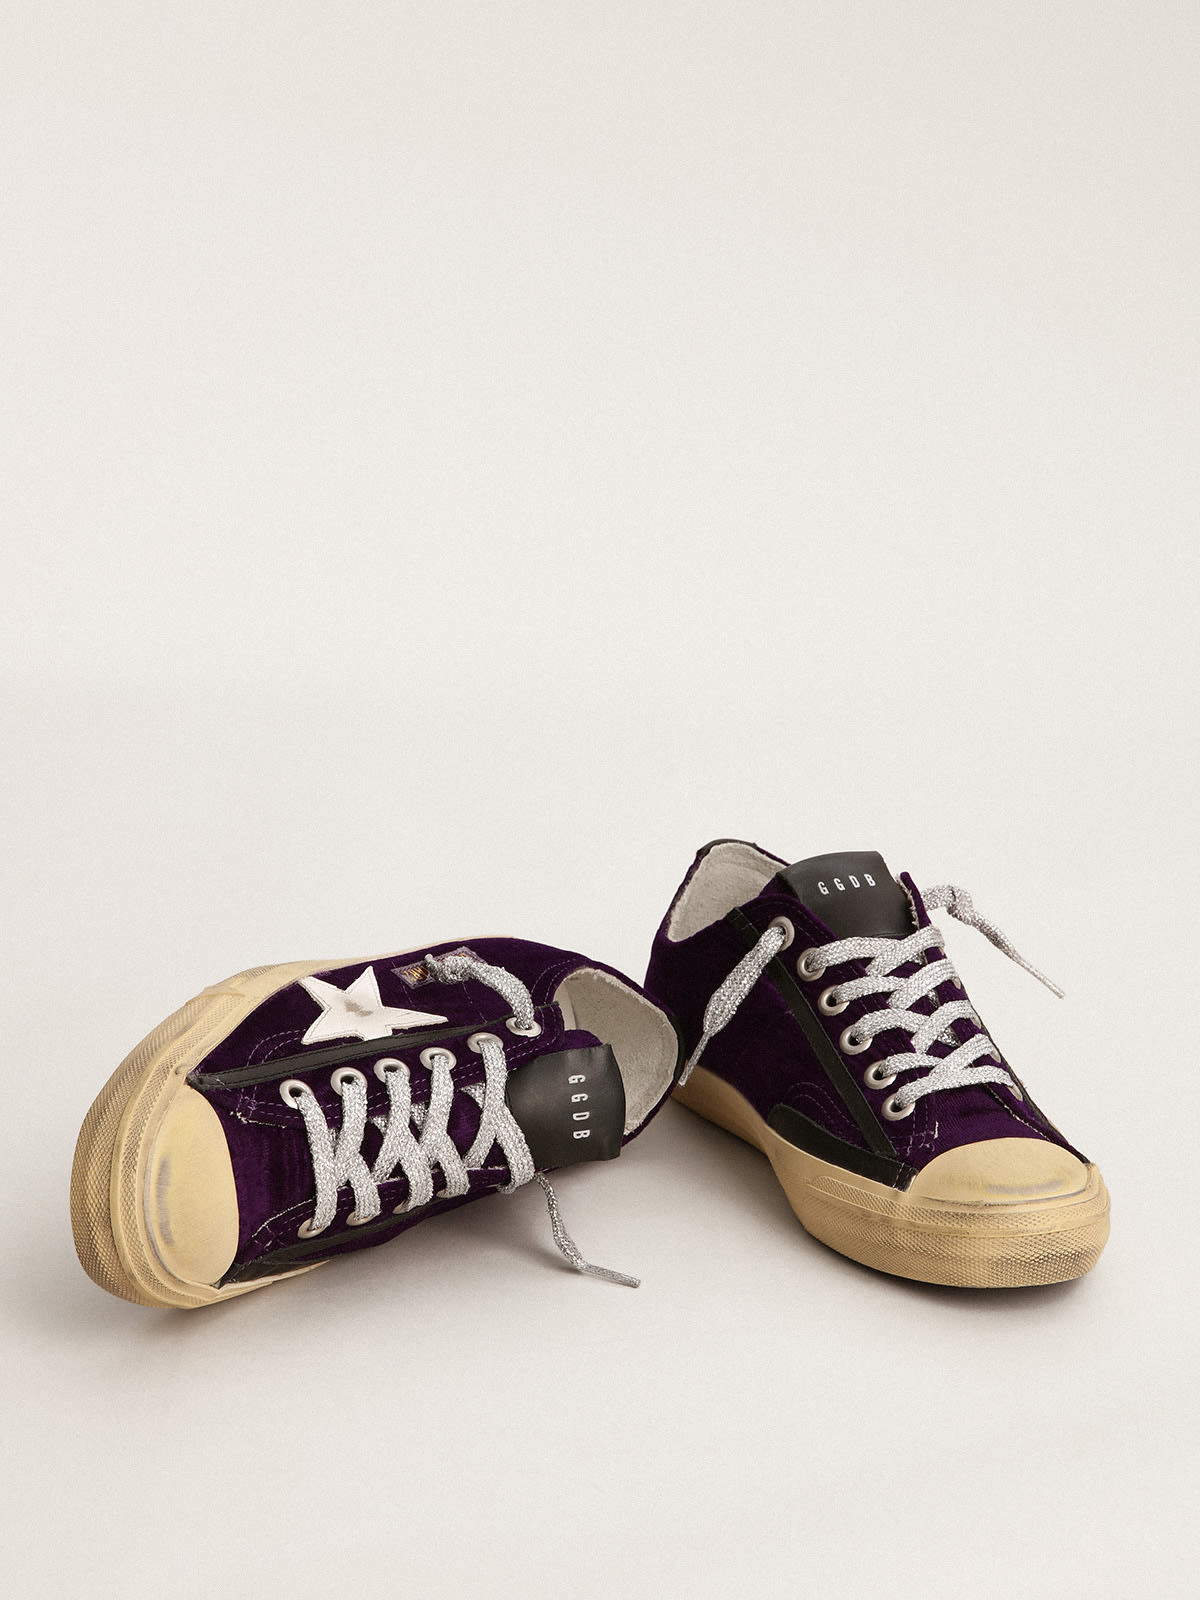 Golden Goose - Sneakers V-Star LTD en velours violet avec étoile en cuir blanc in 